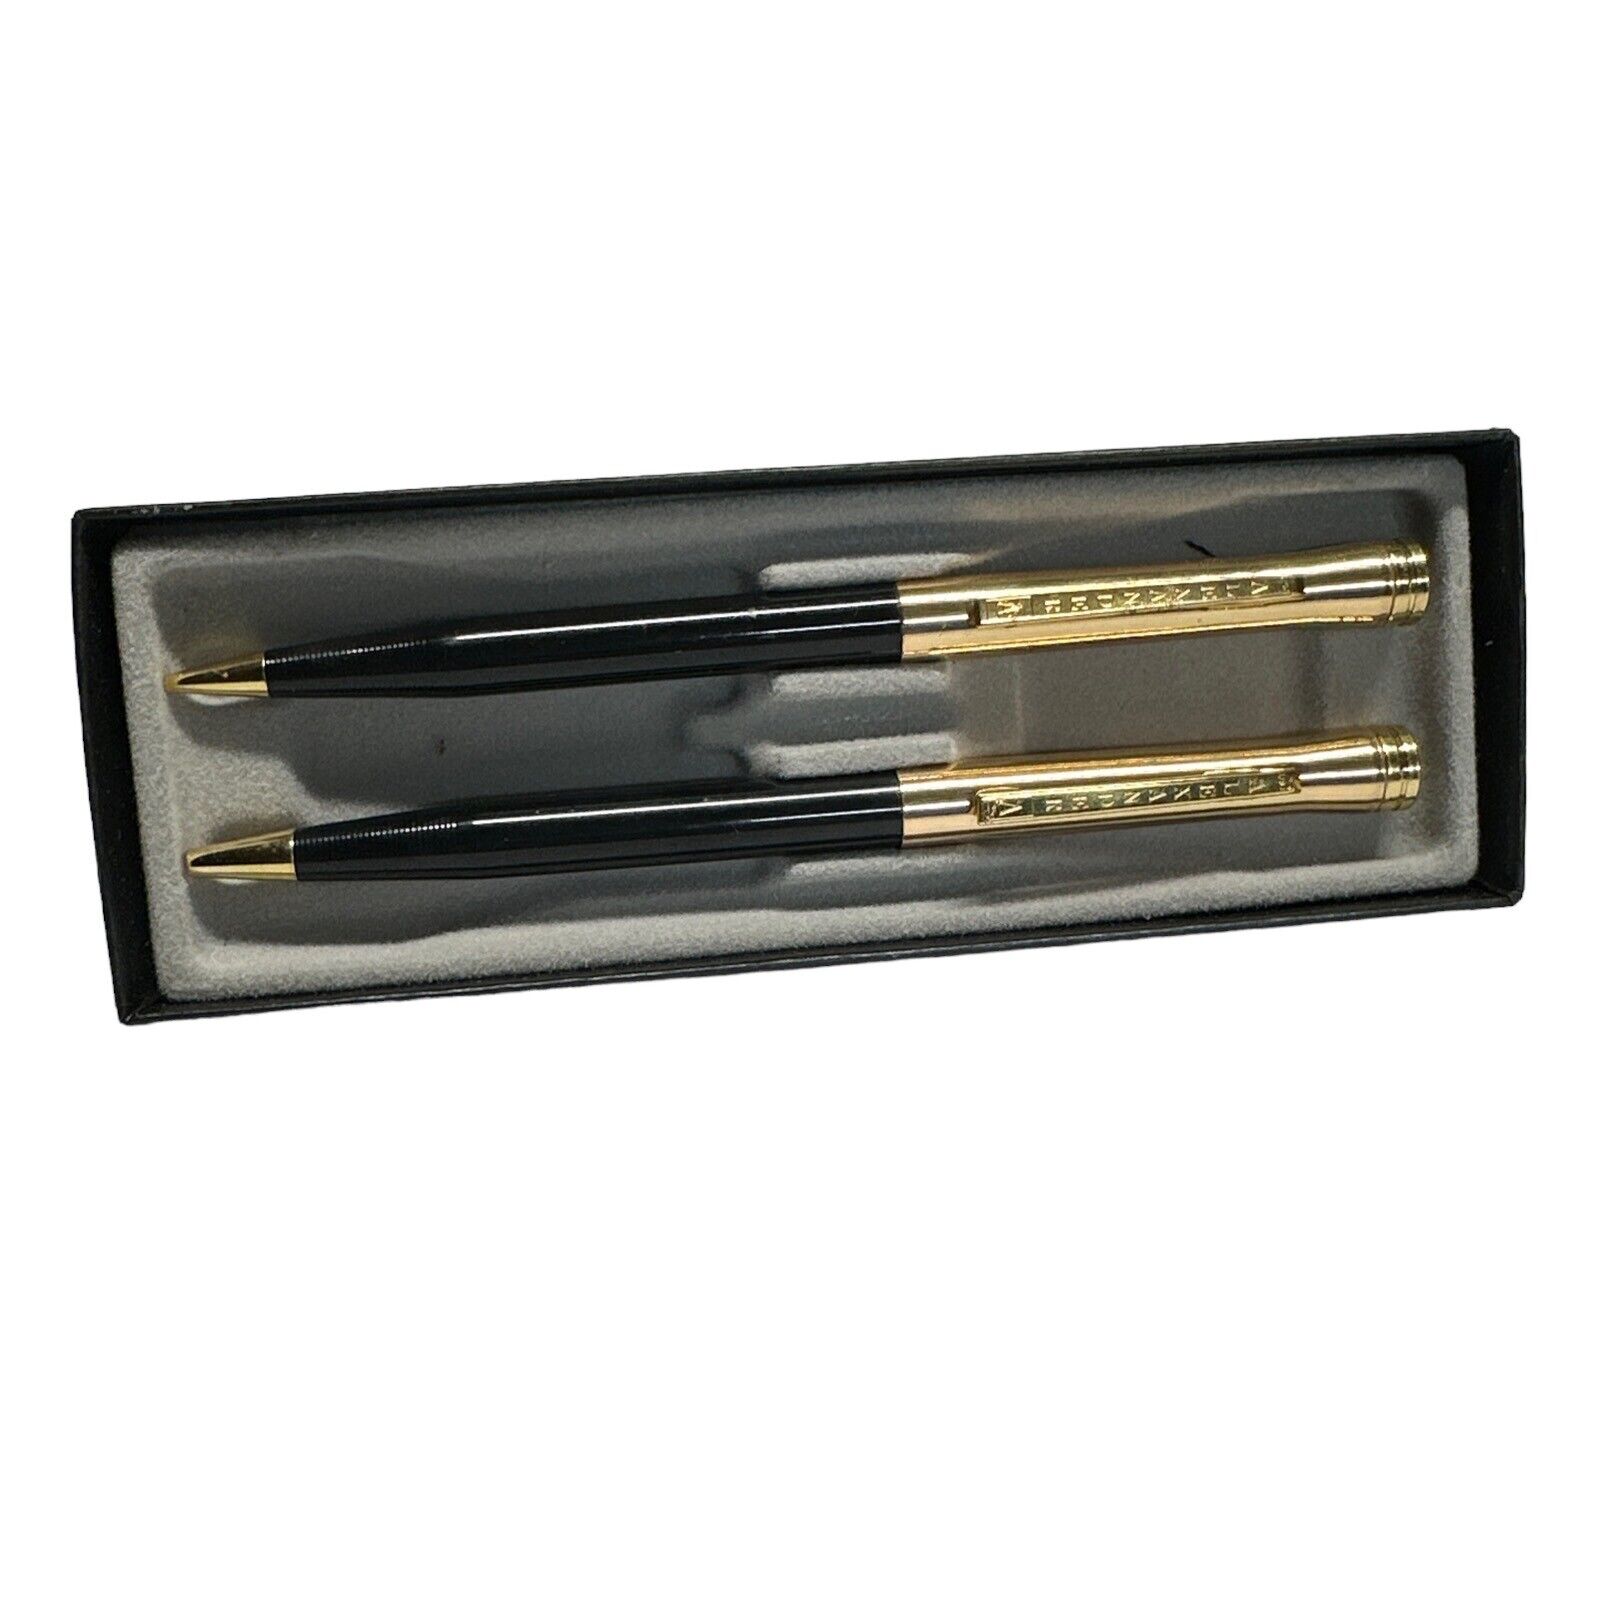 Vintage Alexander Pen And Pencil Set - Logo Classic - Working - Original Box